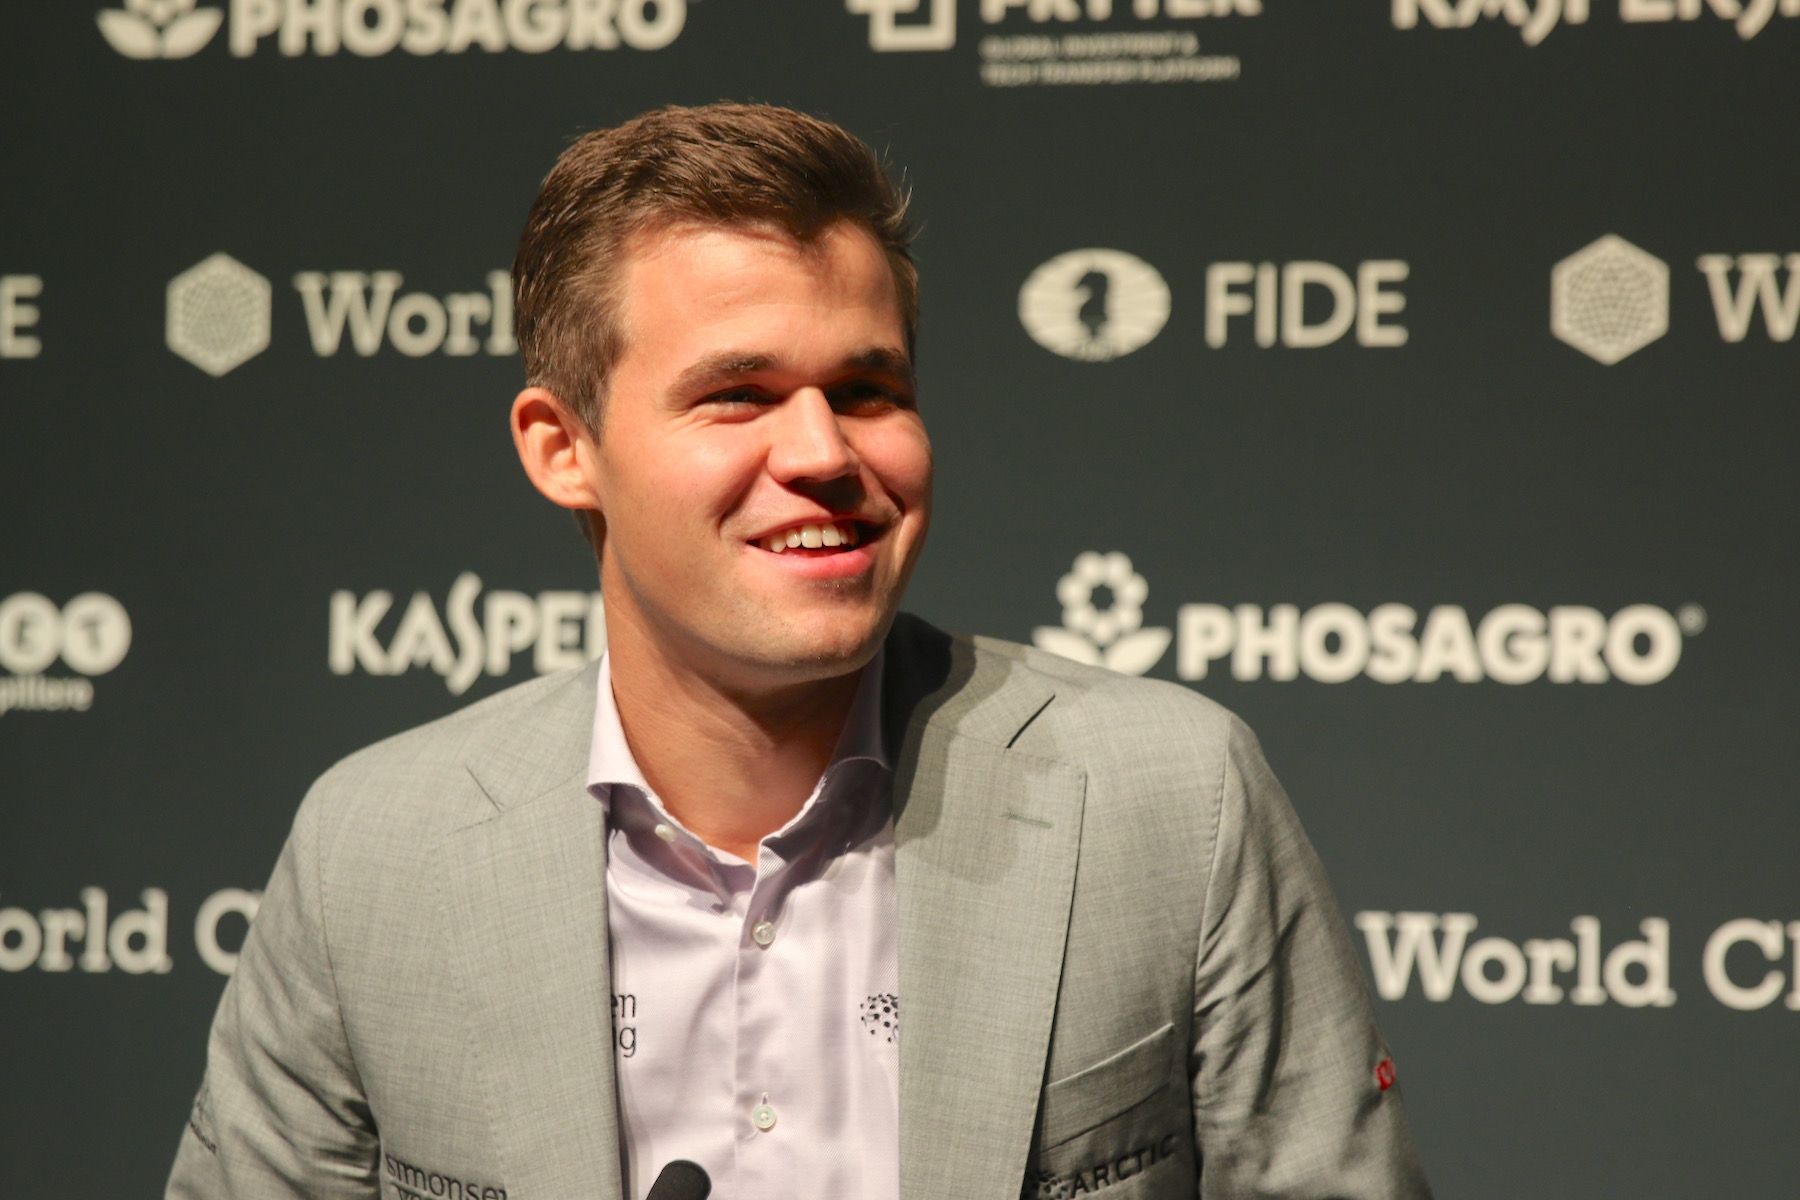 Carlsen-Caruana 5: Magnus can't match his idol